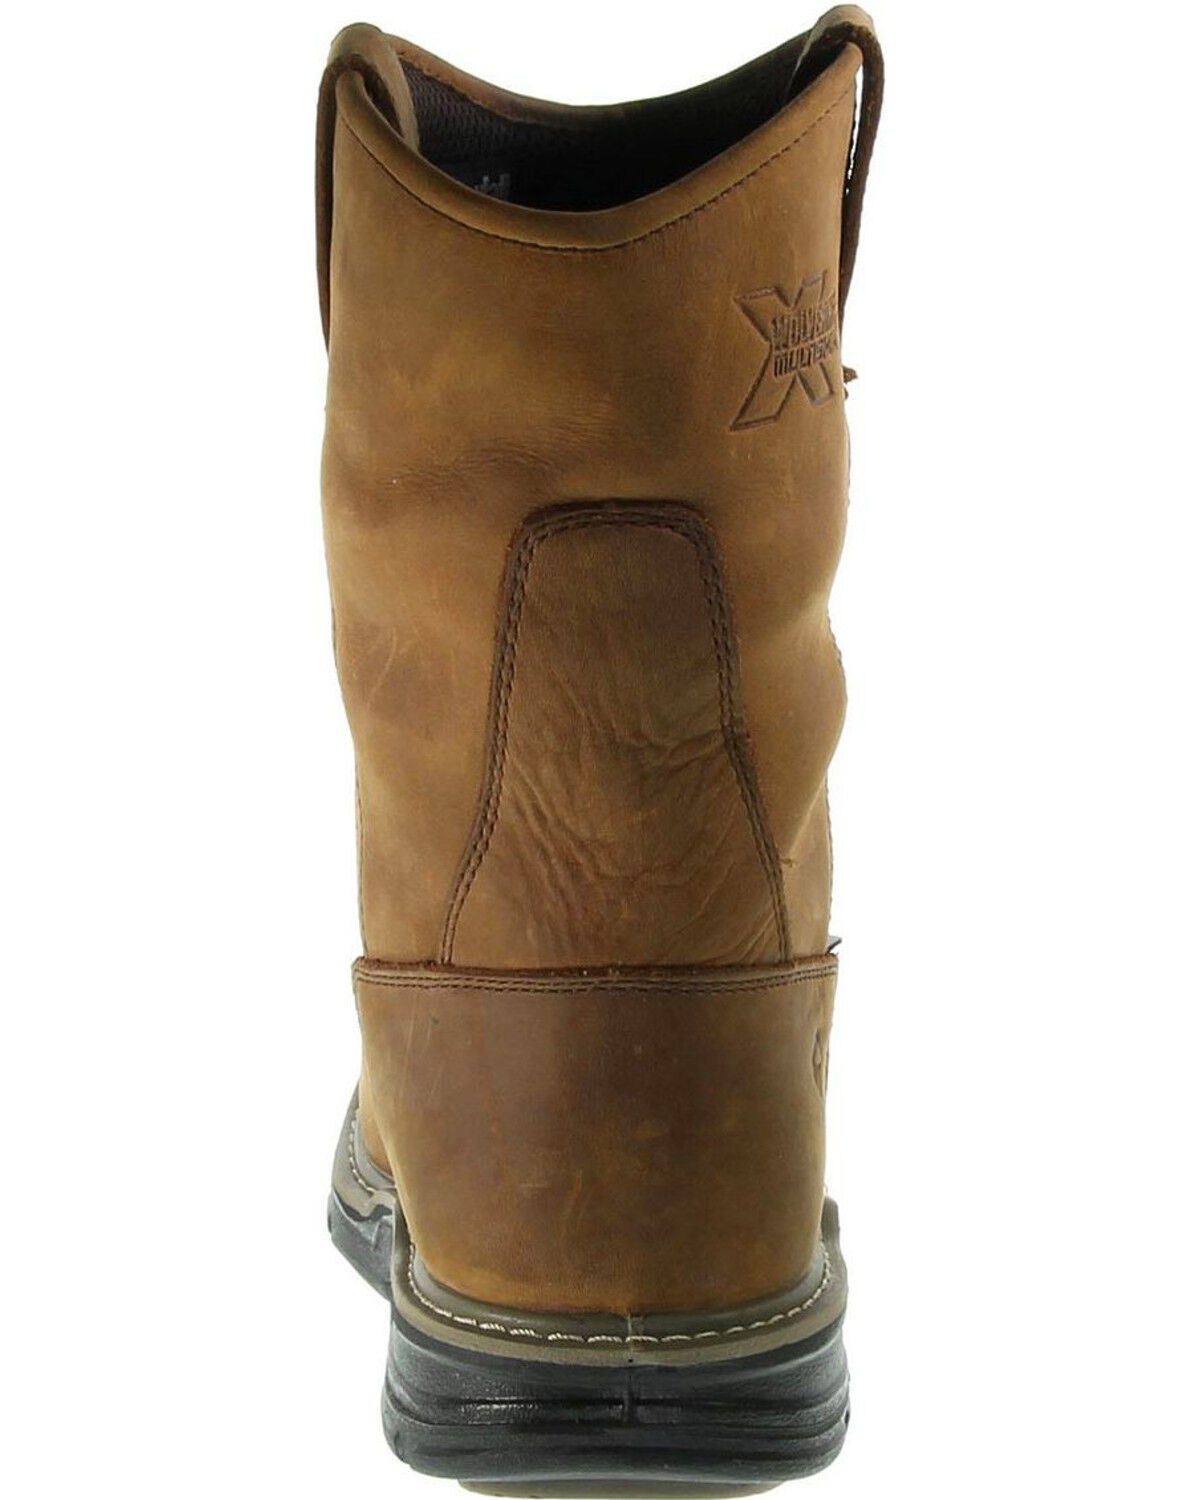 wolverine men's marauder rubber insulated wellington work boot